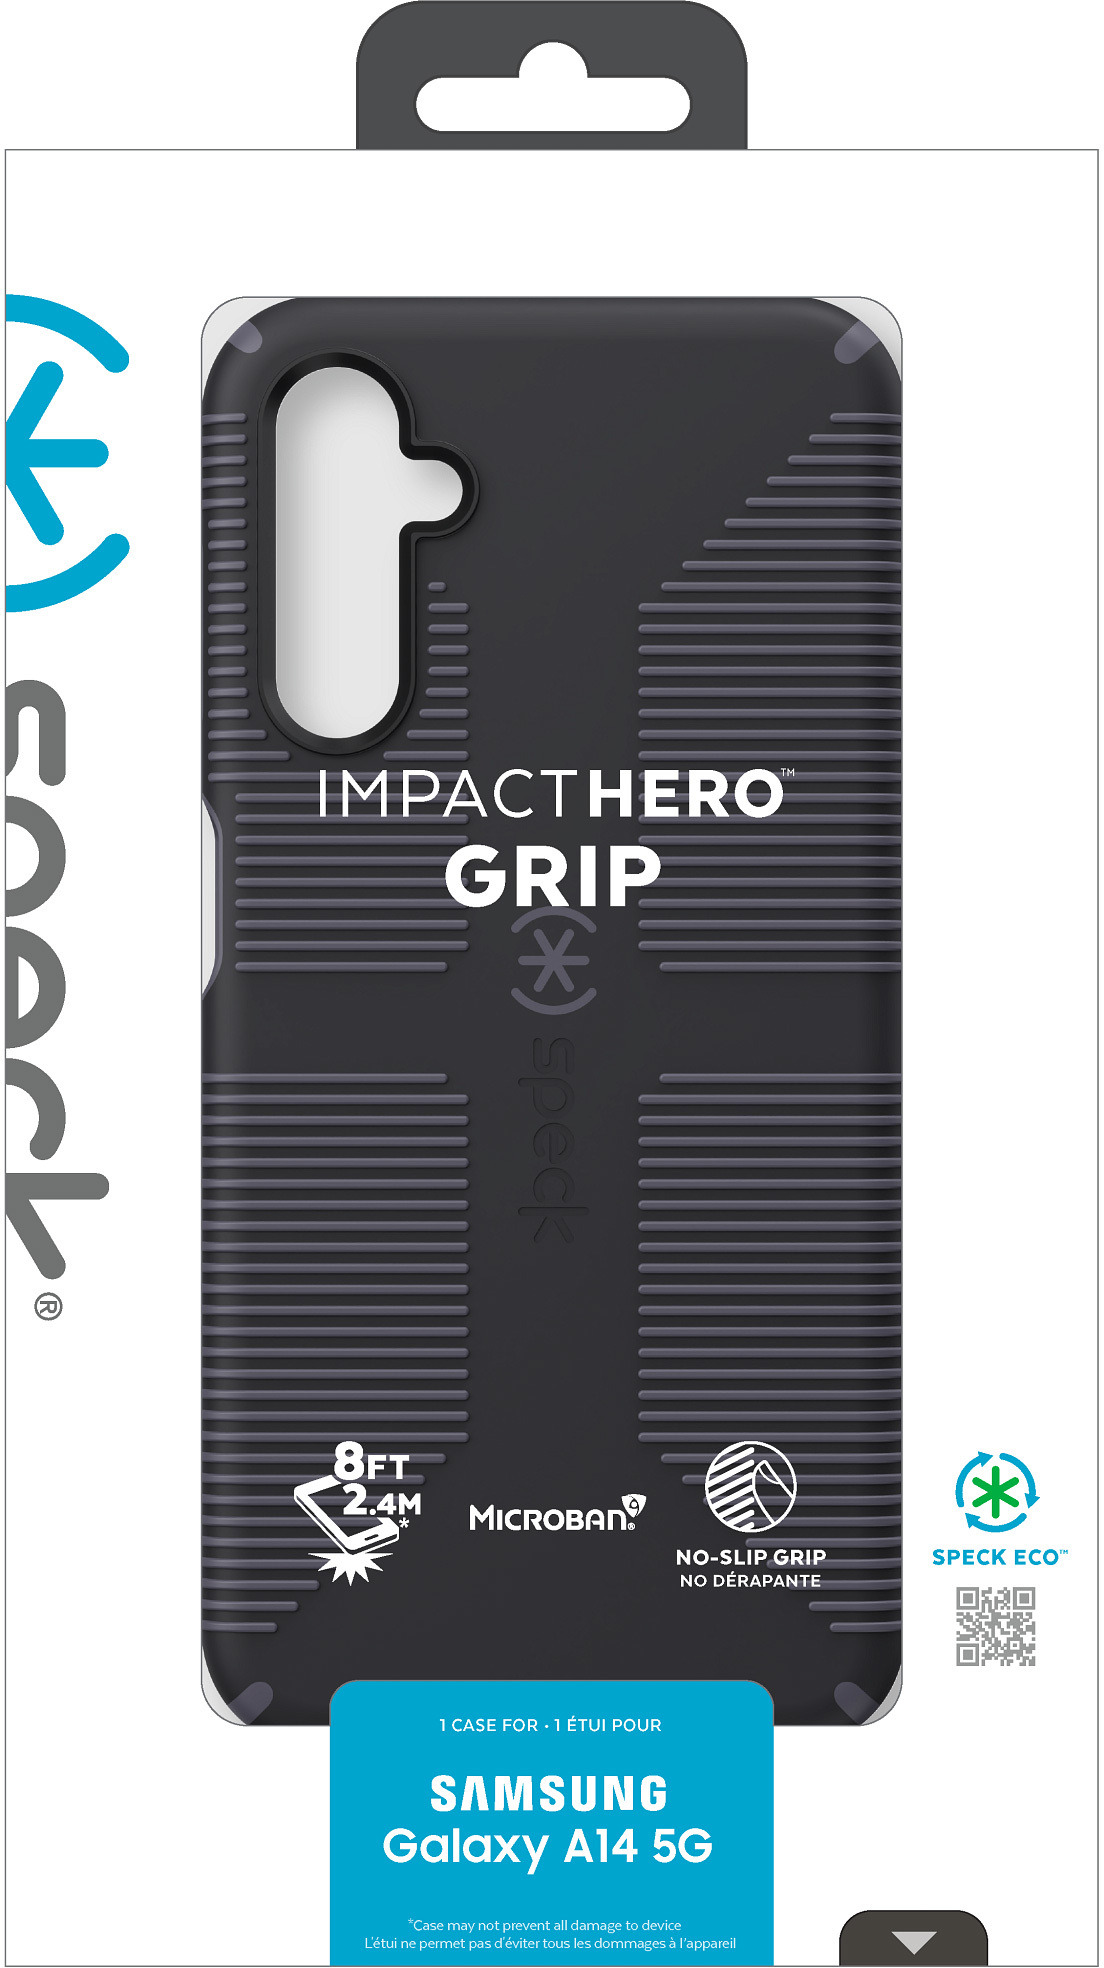 Tas SPECK Impact Hero Grip Samsung Galaxy A14 Black